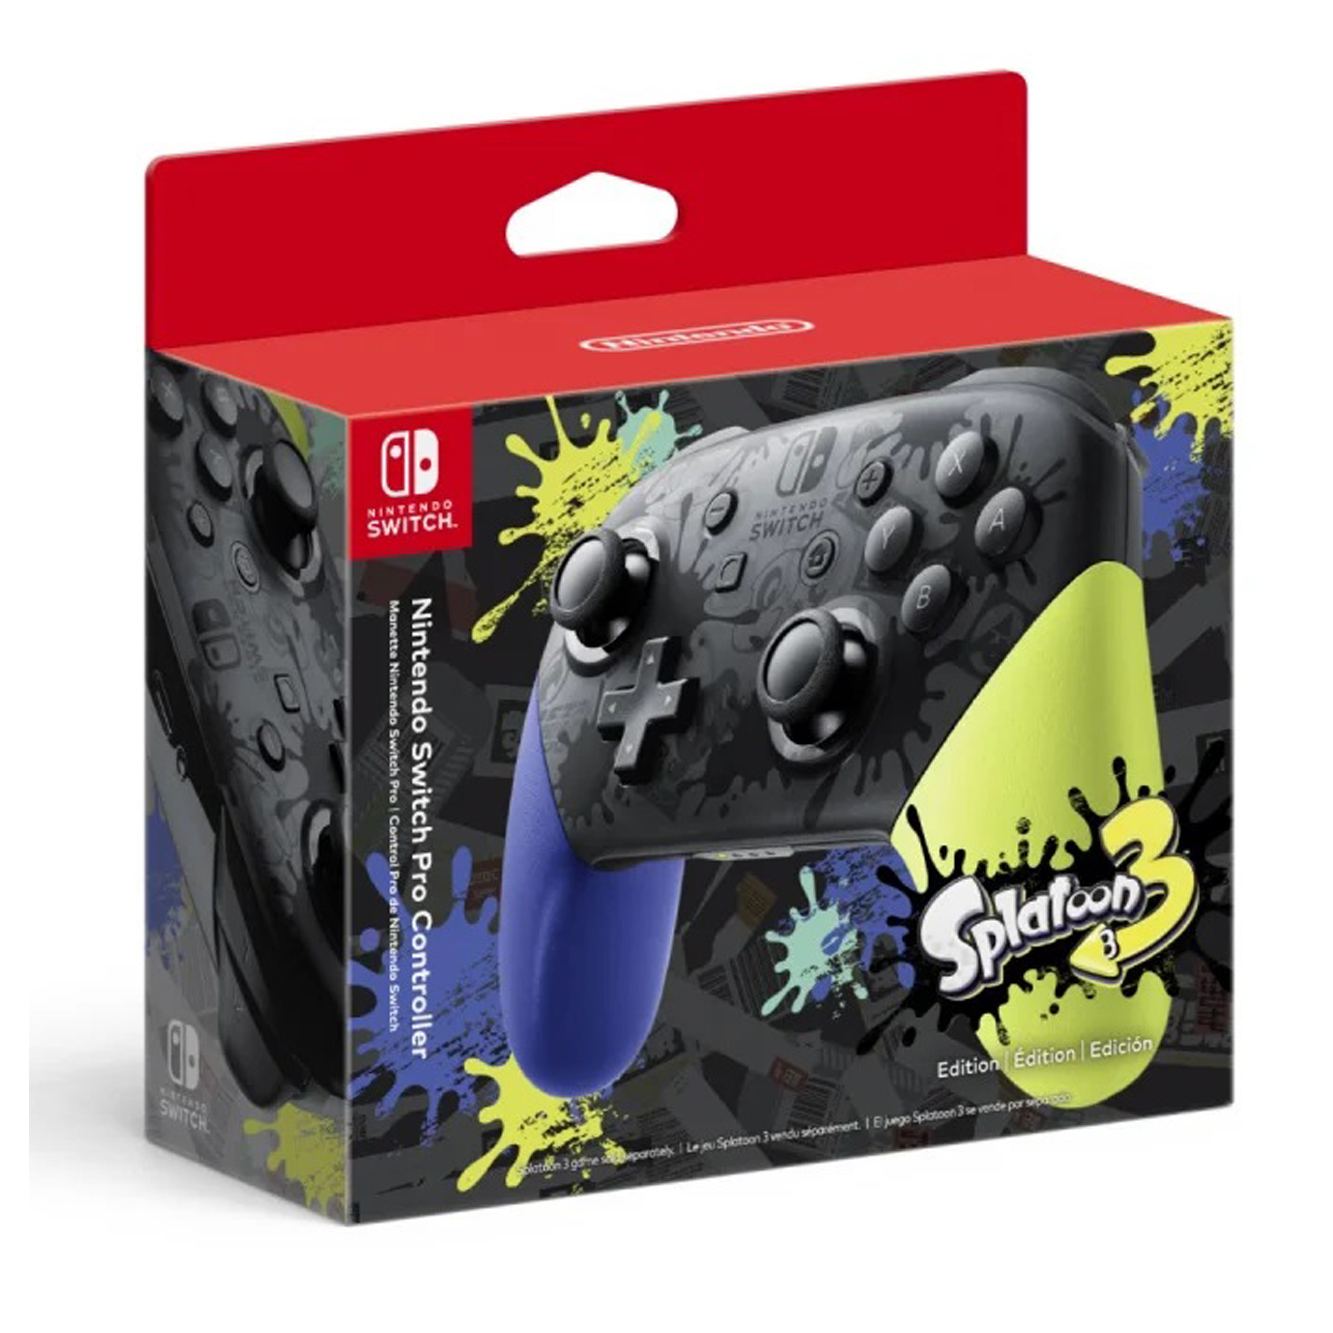 Nintendo Pro Controller [Splatoon 3 Special Edition] for Nintendo Switch